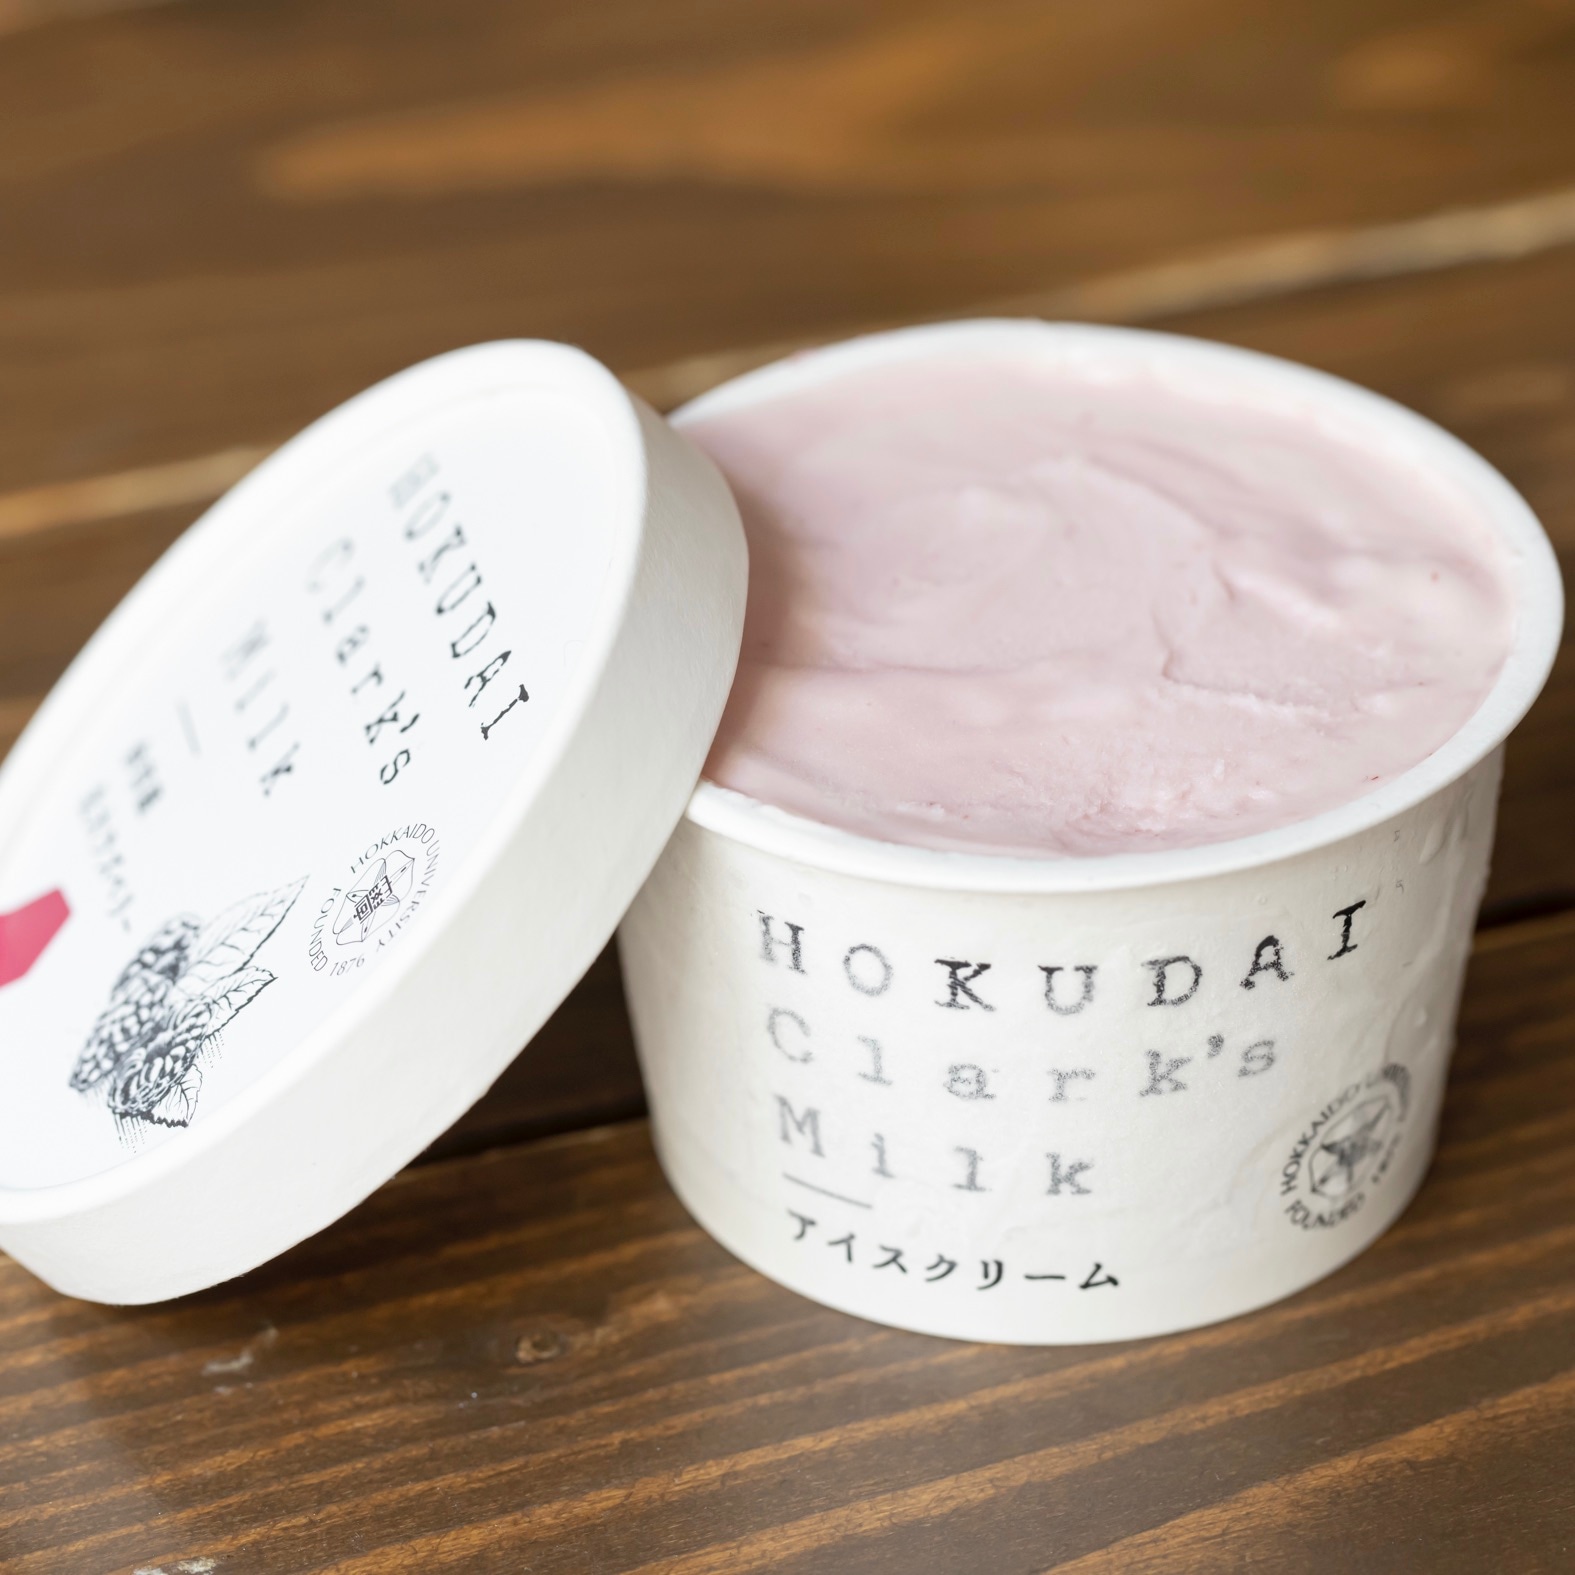 HOKUDAI Clark's Milk アイスクリームのラズベリー味,北海道余市産北大ラズベリーを使ったお取り寄せアイス